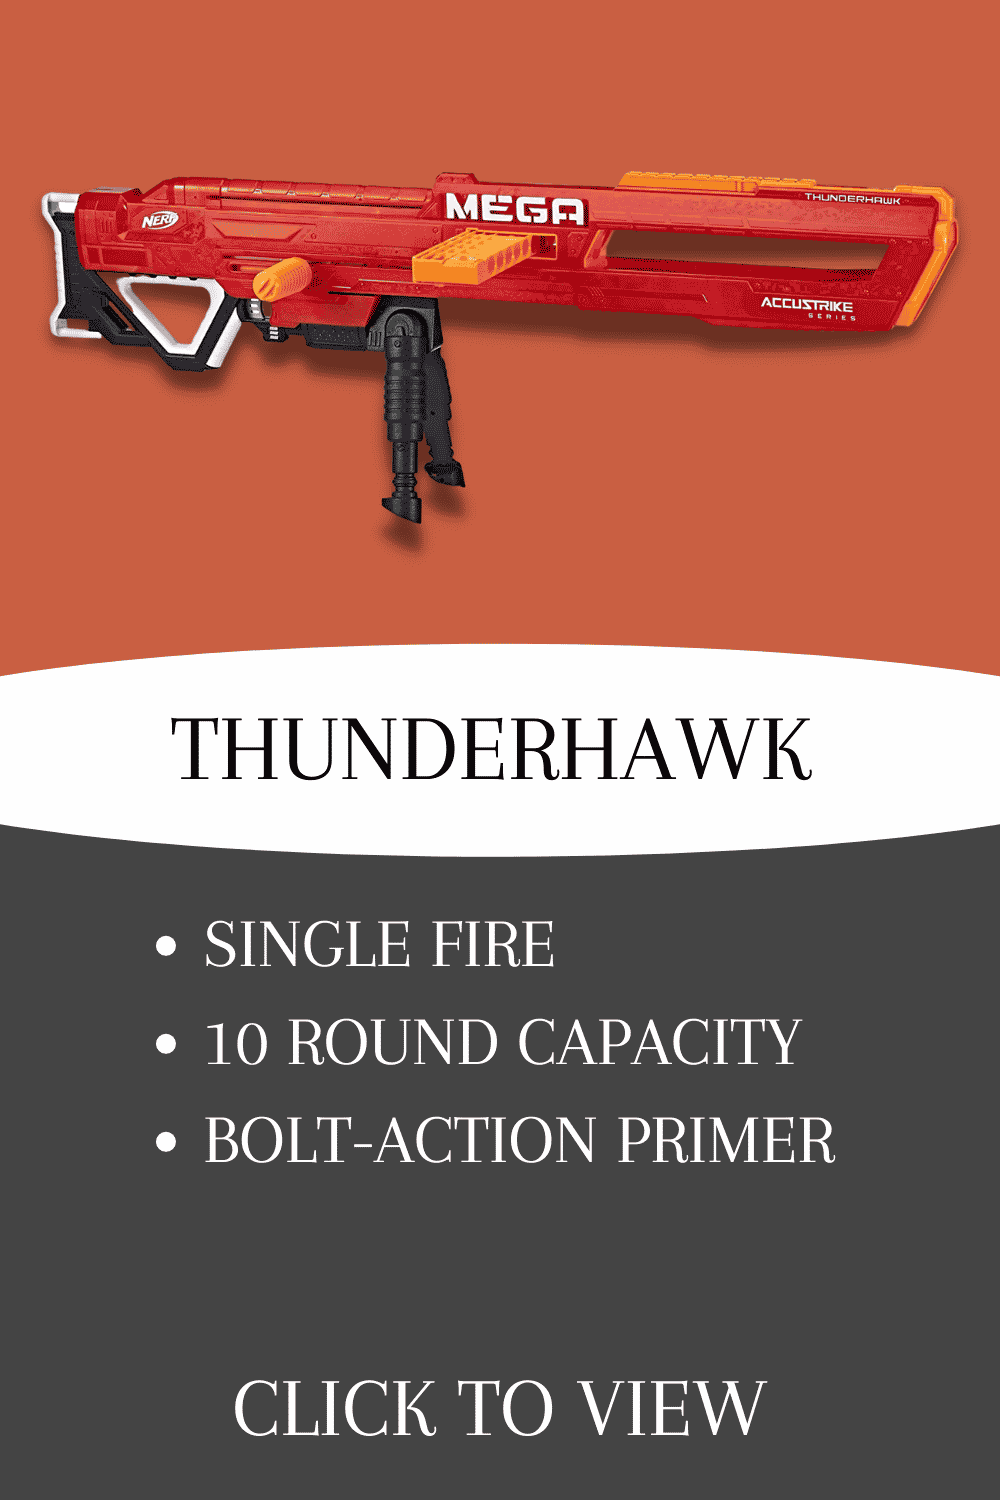 nerf accustrike thunderhawk